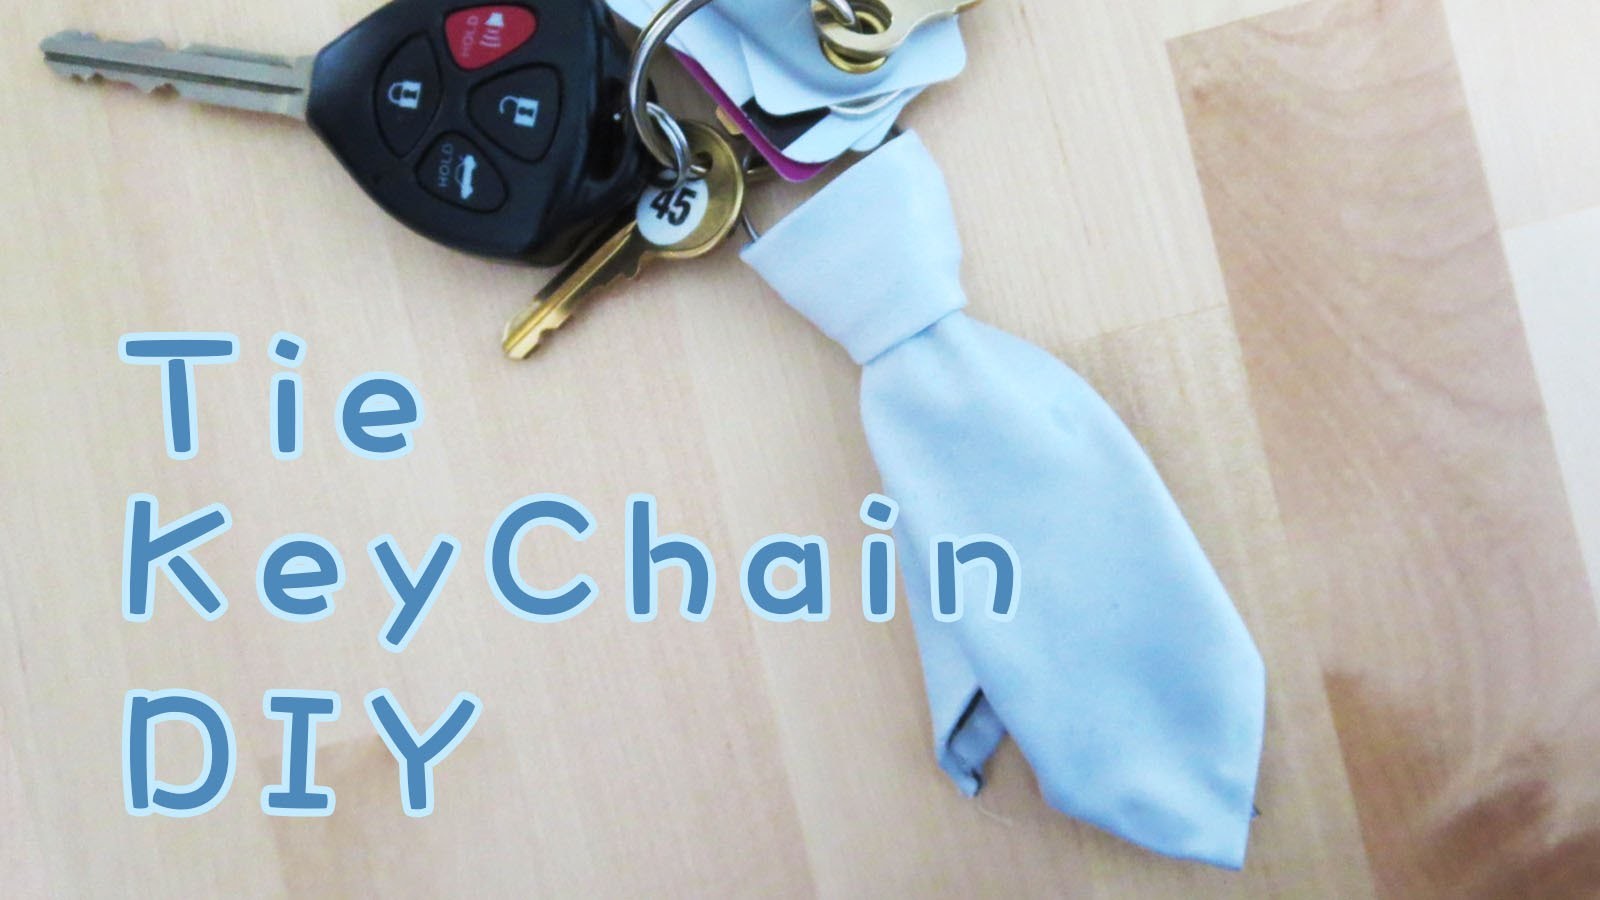 Father's Day Gift Idea - Tie Key Chain | Sunny DIY